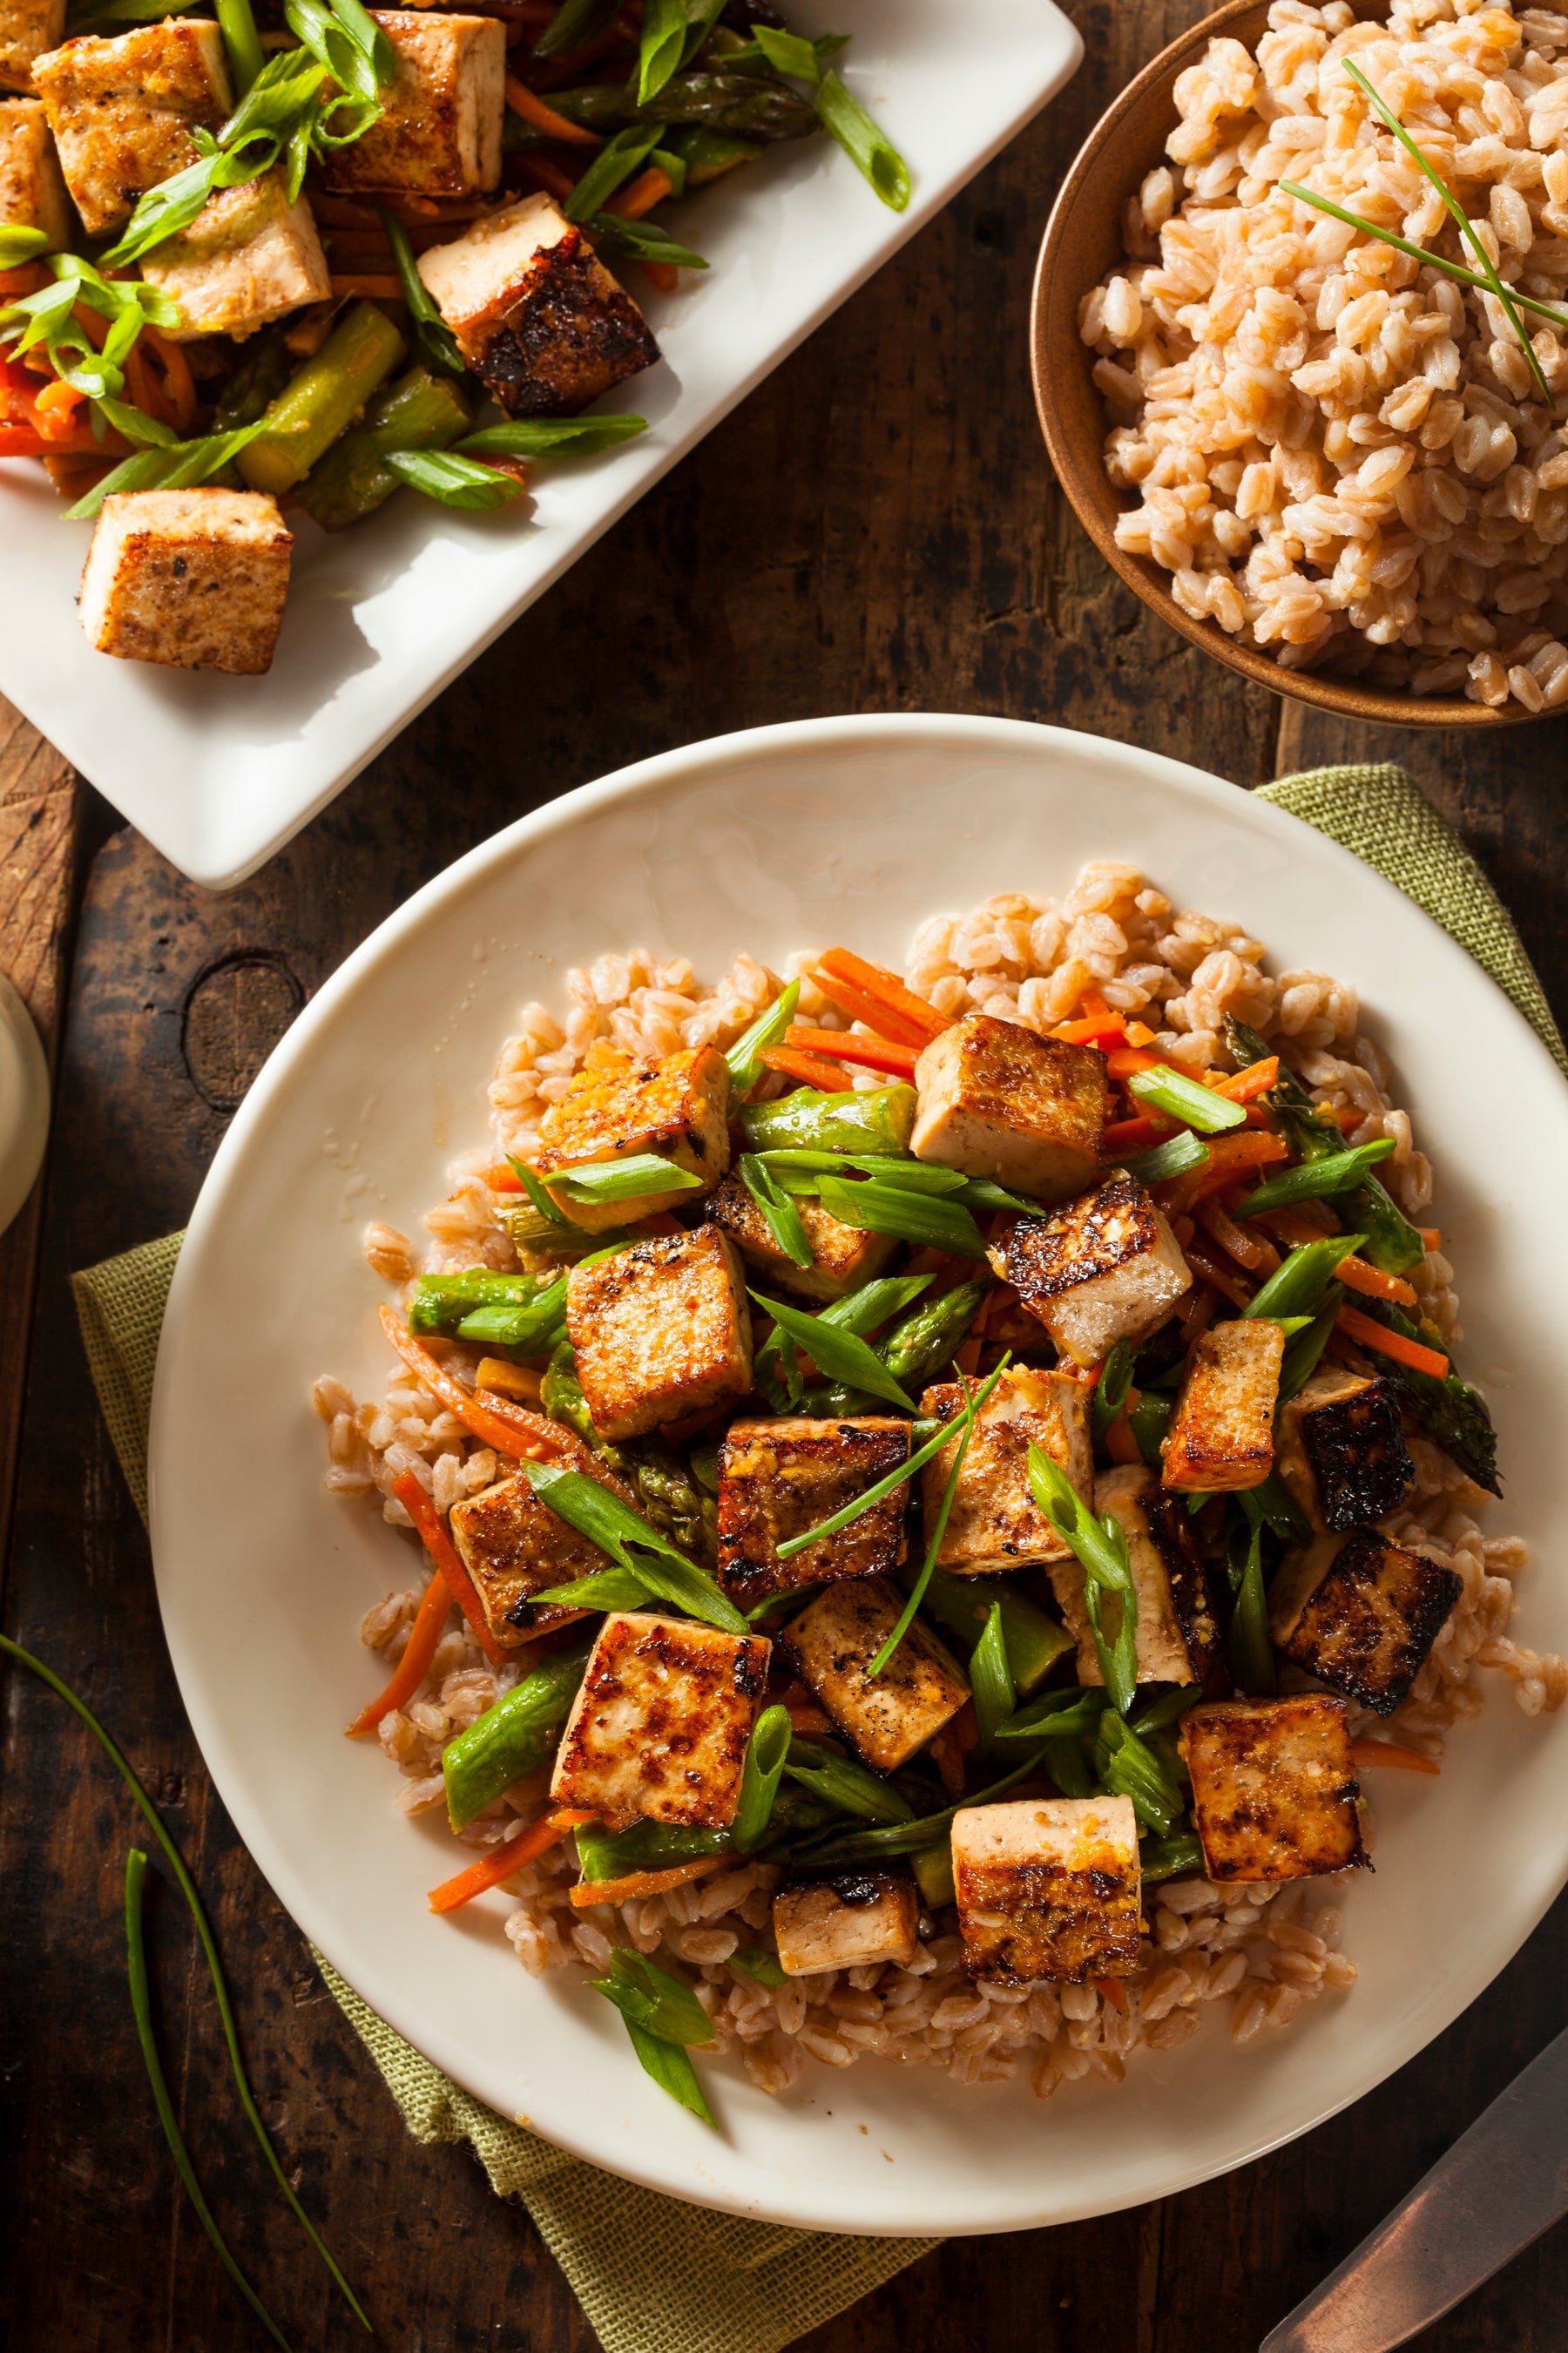 How to Make Vegetarian Tofu Stir-Fry